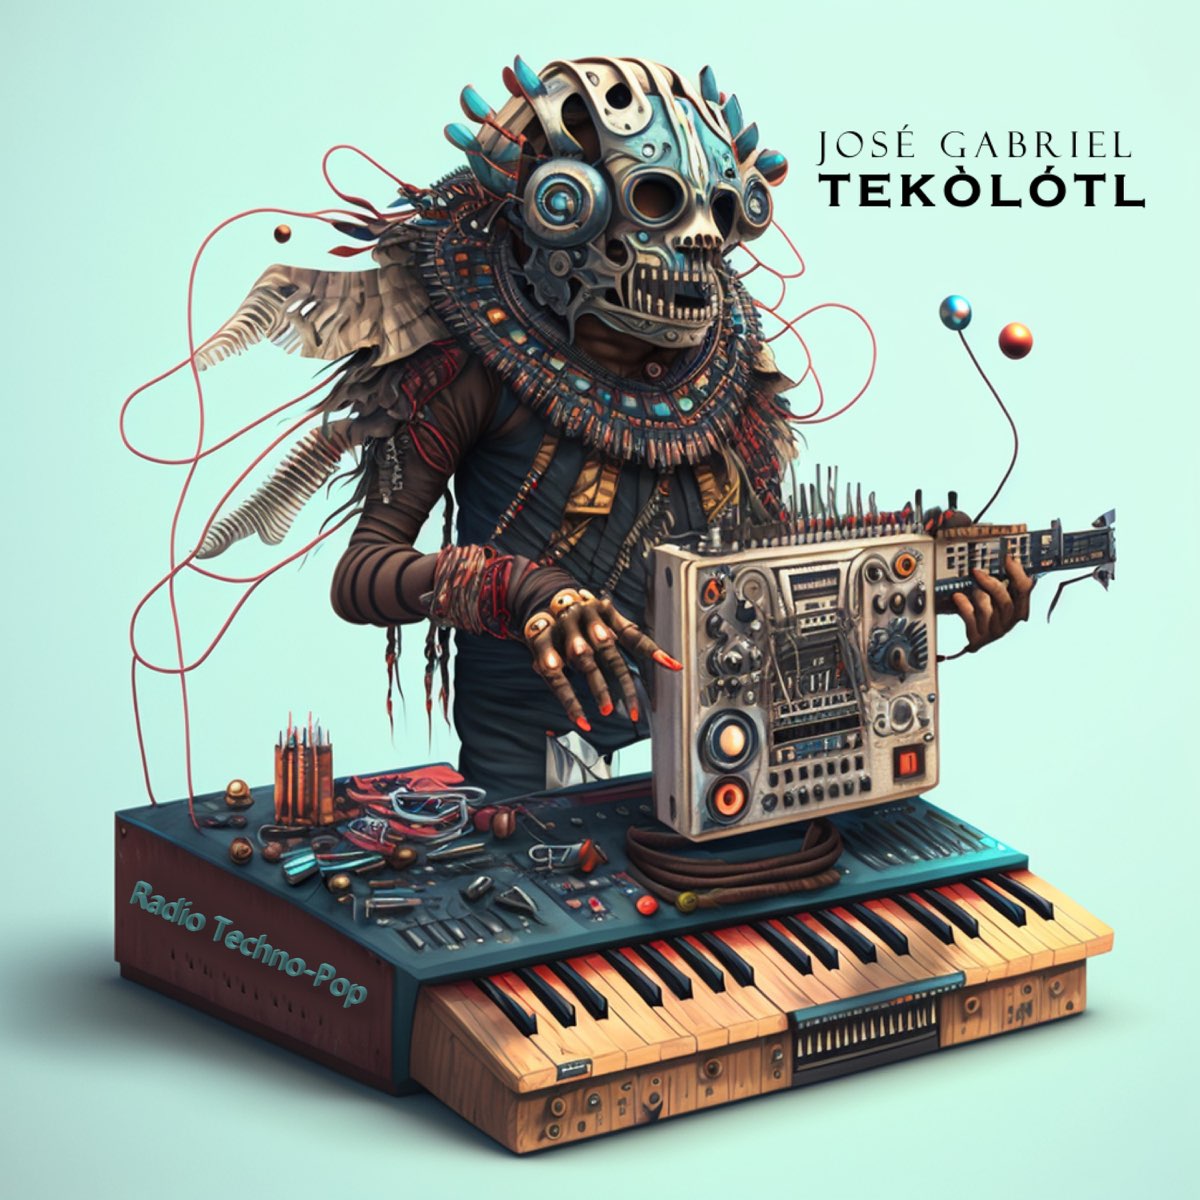 Radio Techno Pop - Single by José Gabriel Tekolotl on Apple Music